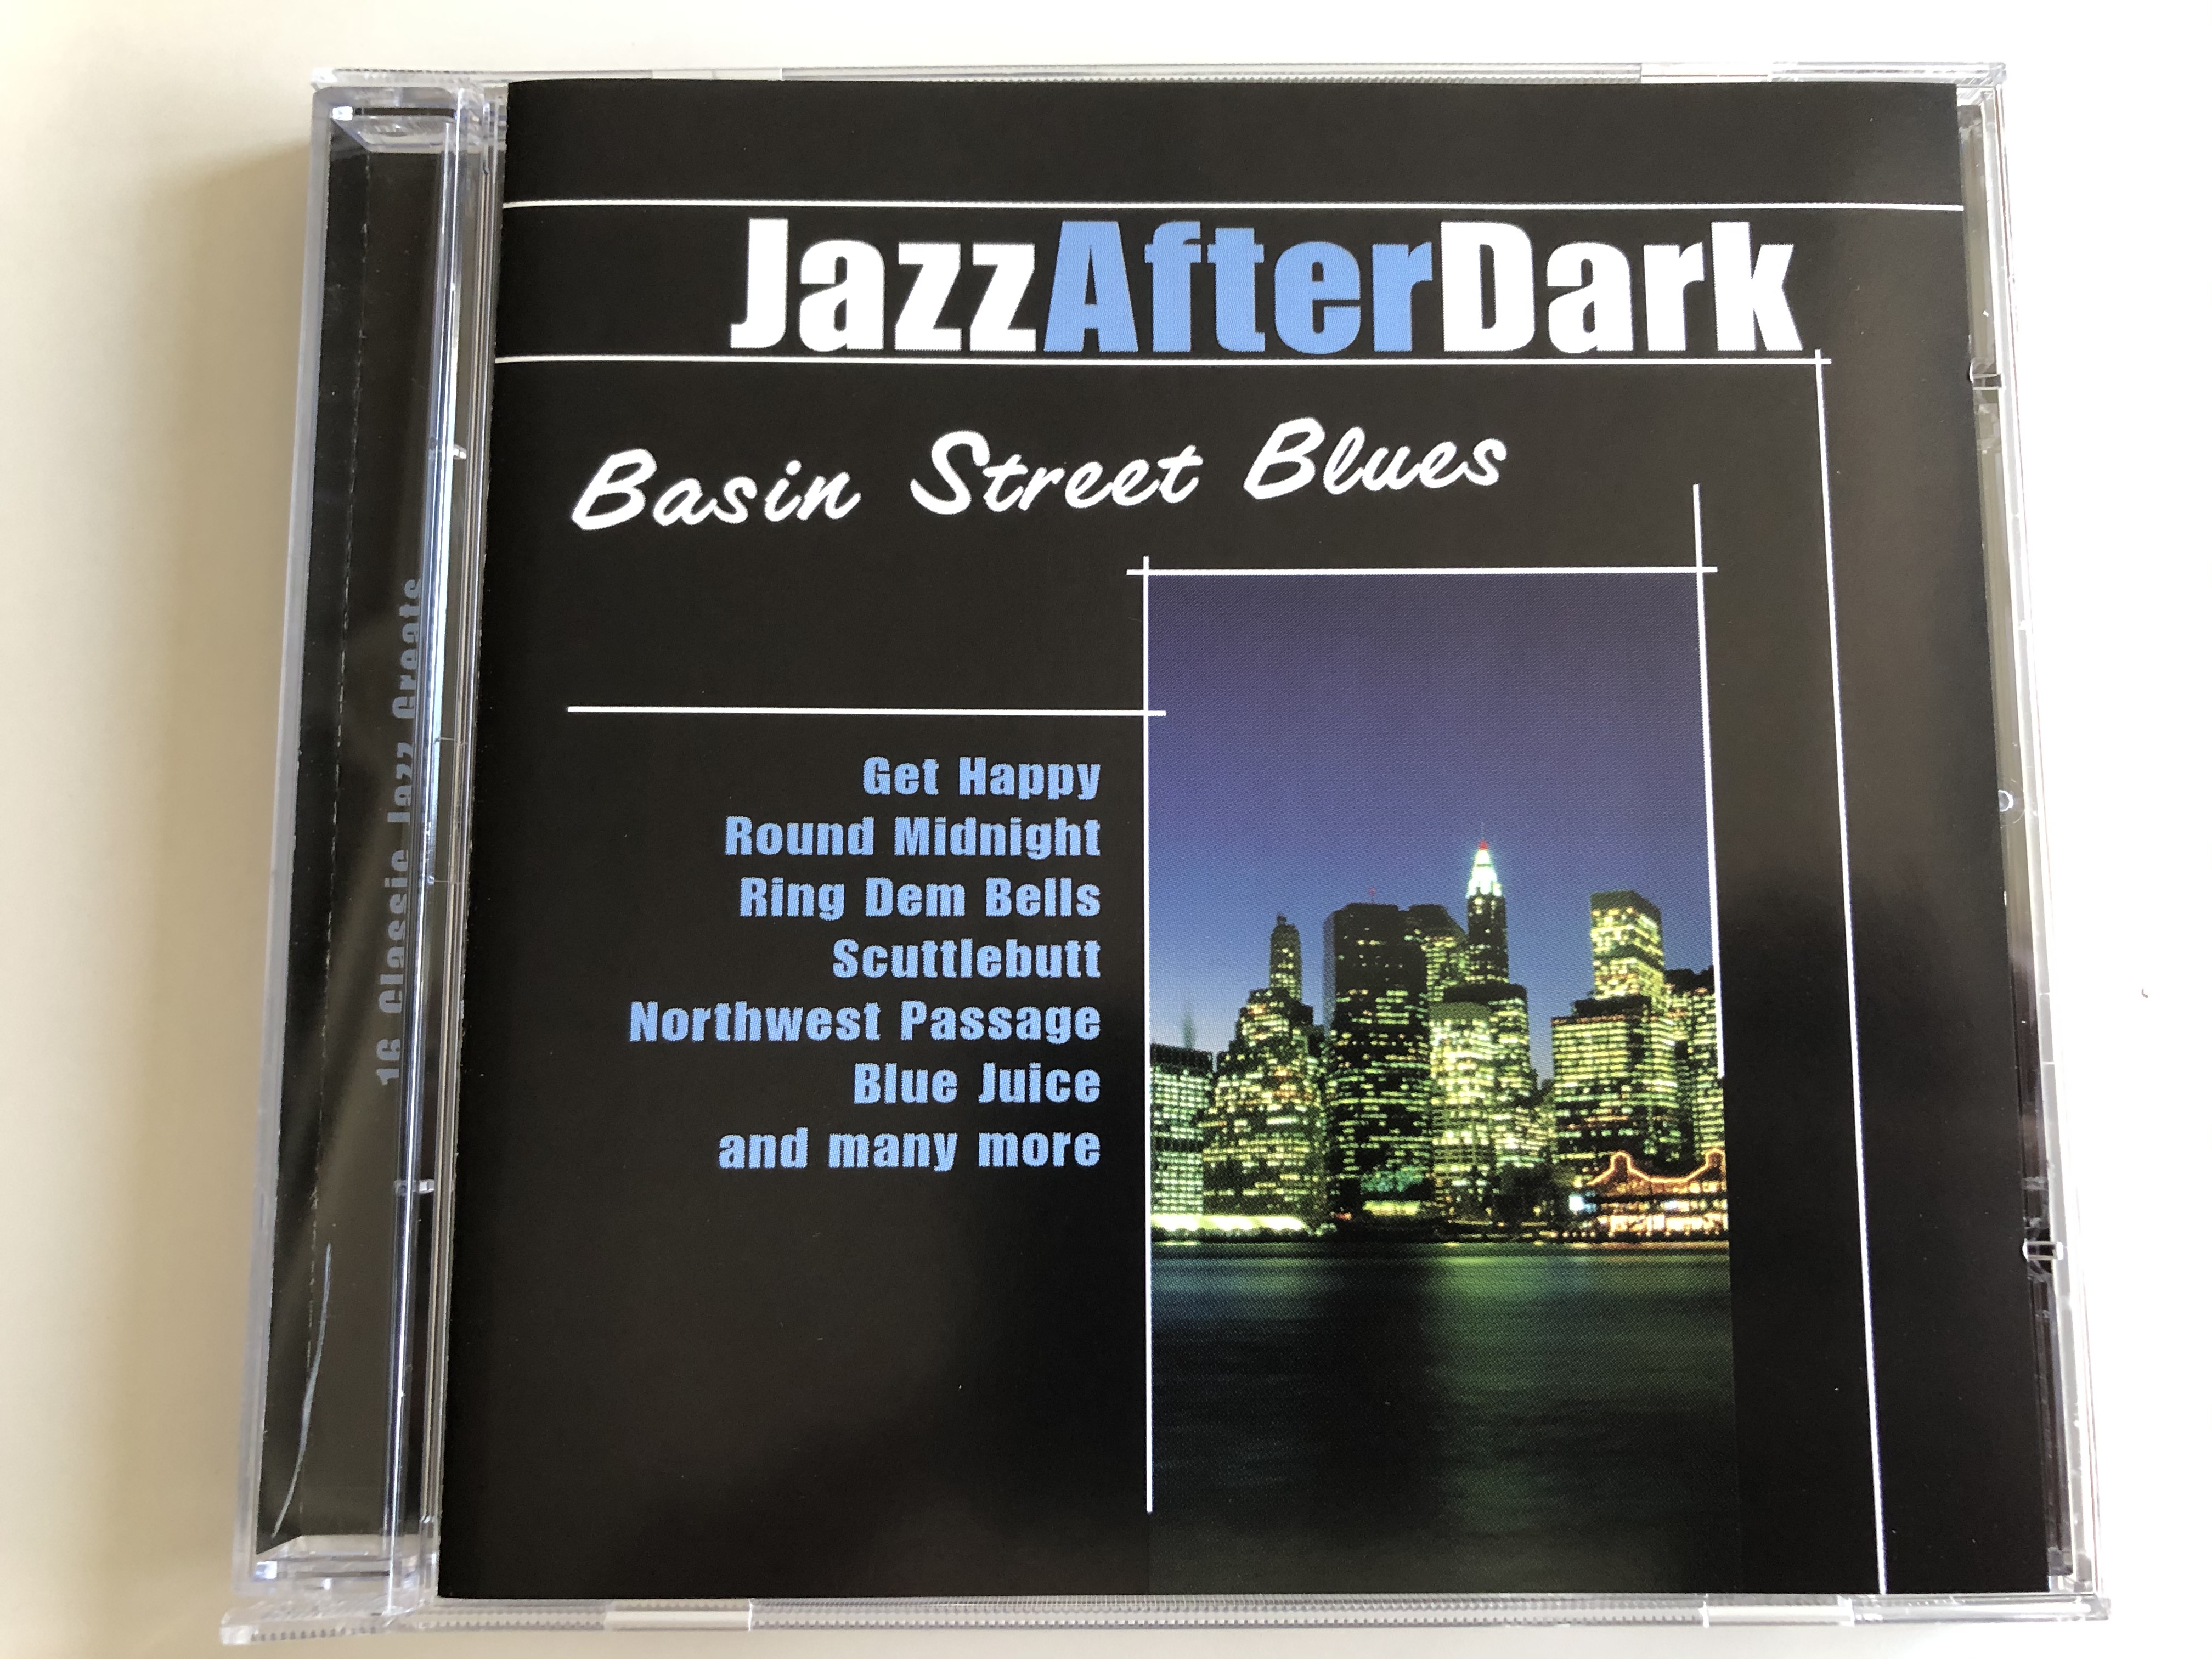 jazz-after-dark-basin-street-blues-get-happy-round-midnight-ring-dem-bells-scuttlebutt-northwest-passage-blue-juice-and-many-more-exclusive-edition-audio-cd-2005-21027-2-1-.jpg